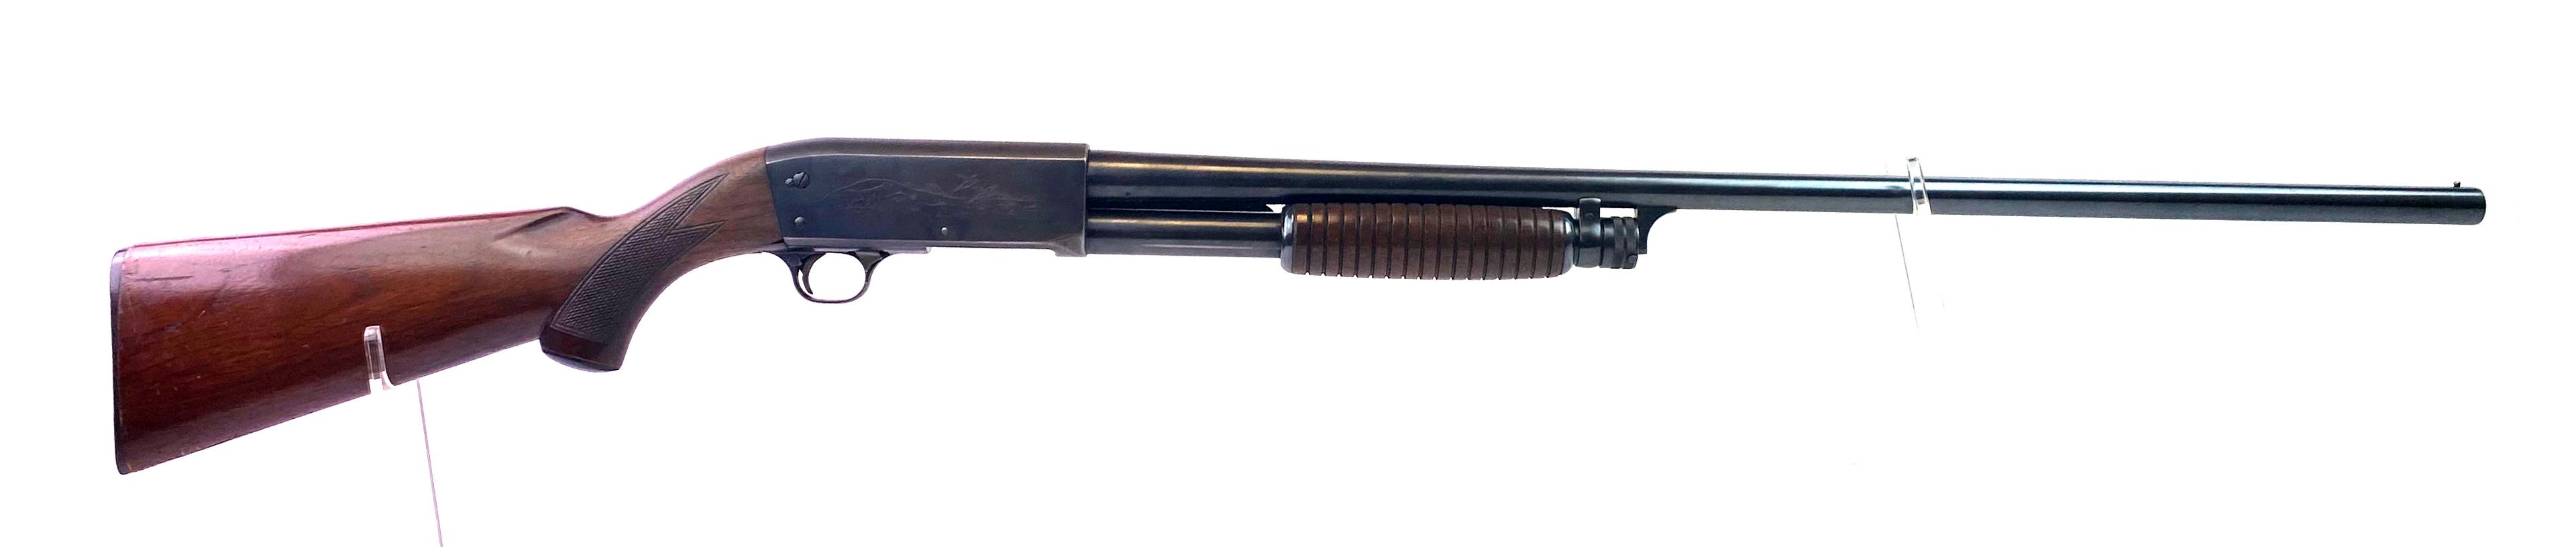 1951 Ithaca Model 37 12 GA. Slamfire Pump Action Shotgun